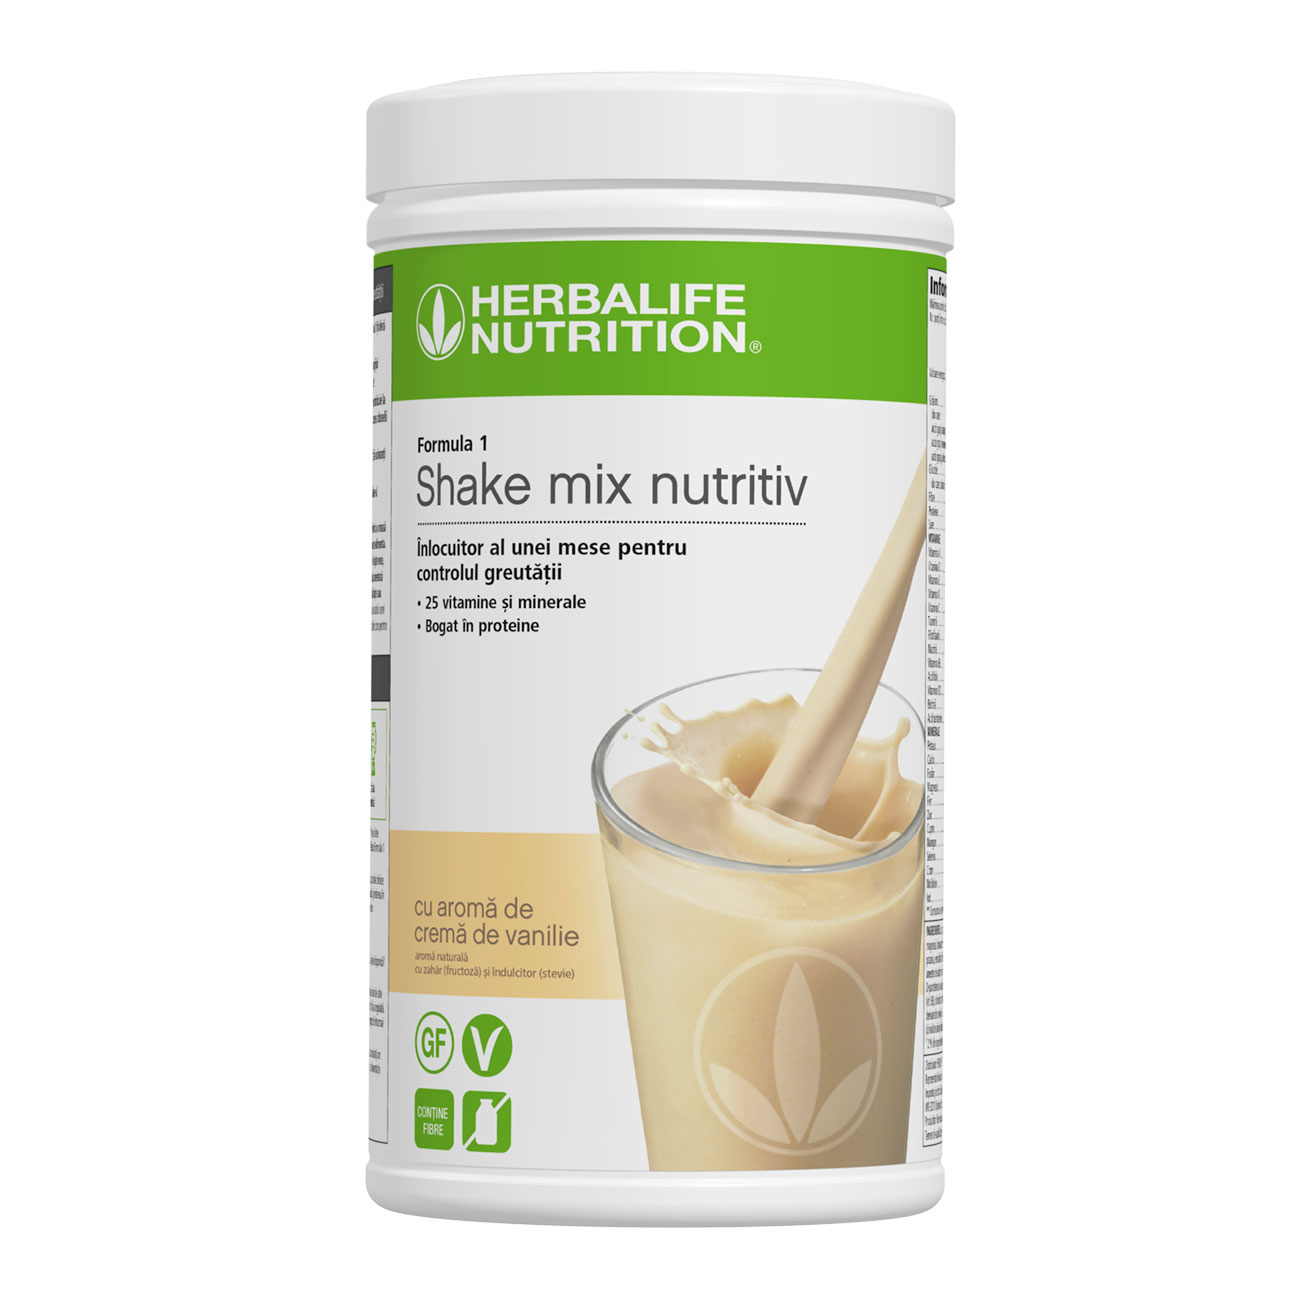 Formula 1 Shake mix nutritiv Cremă de vanilie 550g product shot